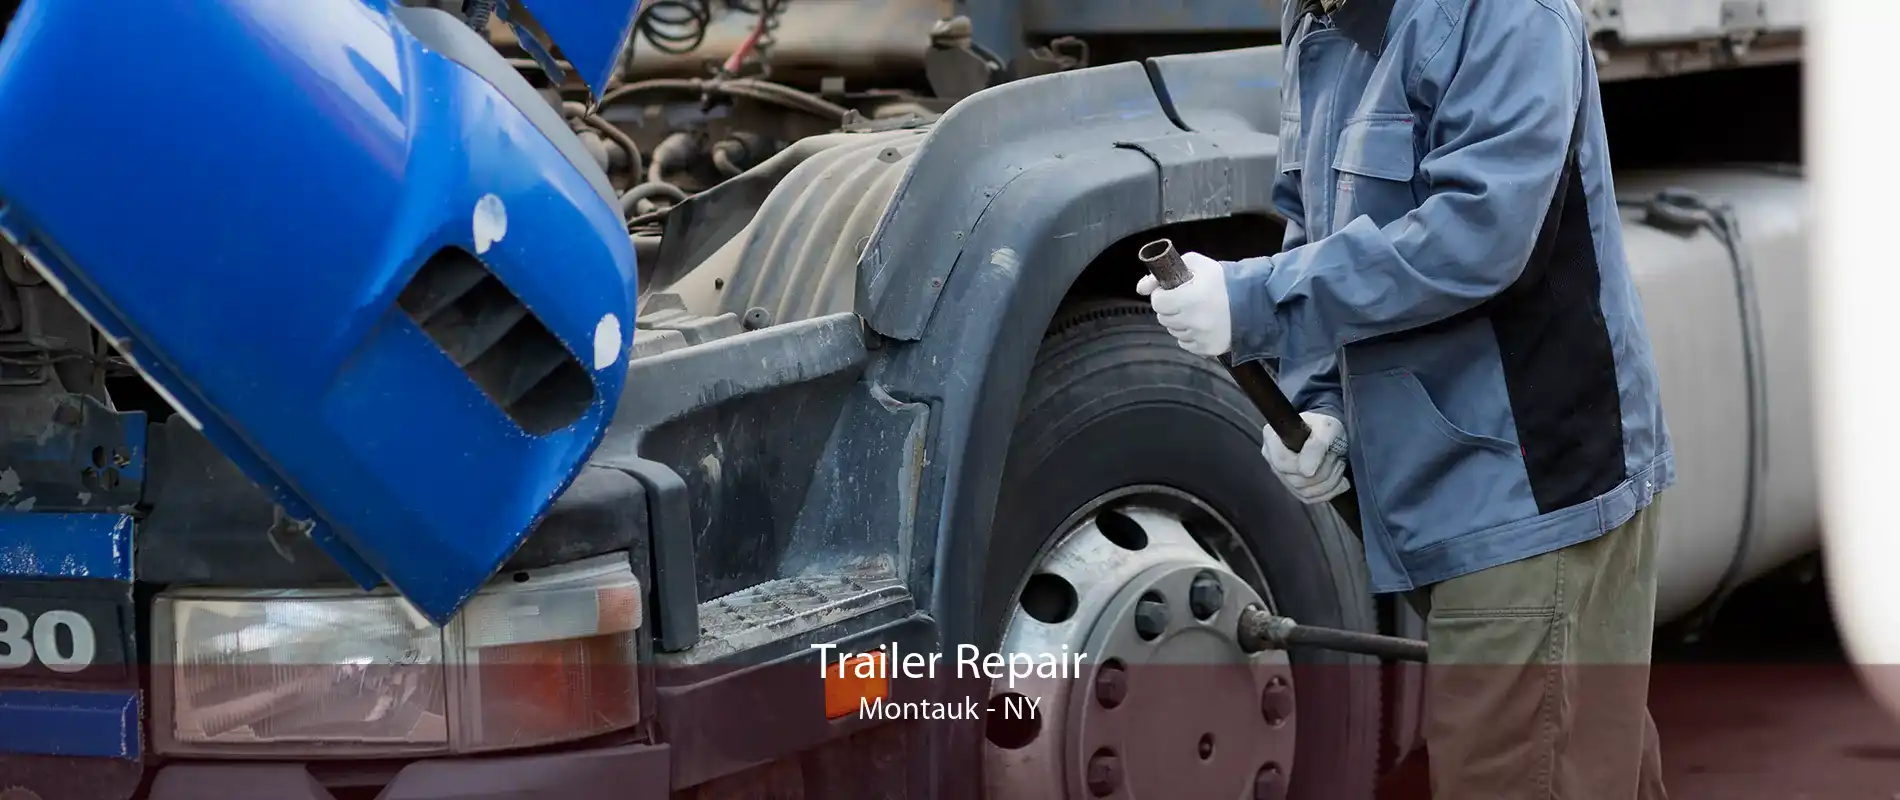 Trailer Repair Montauk - NY